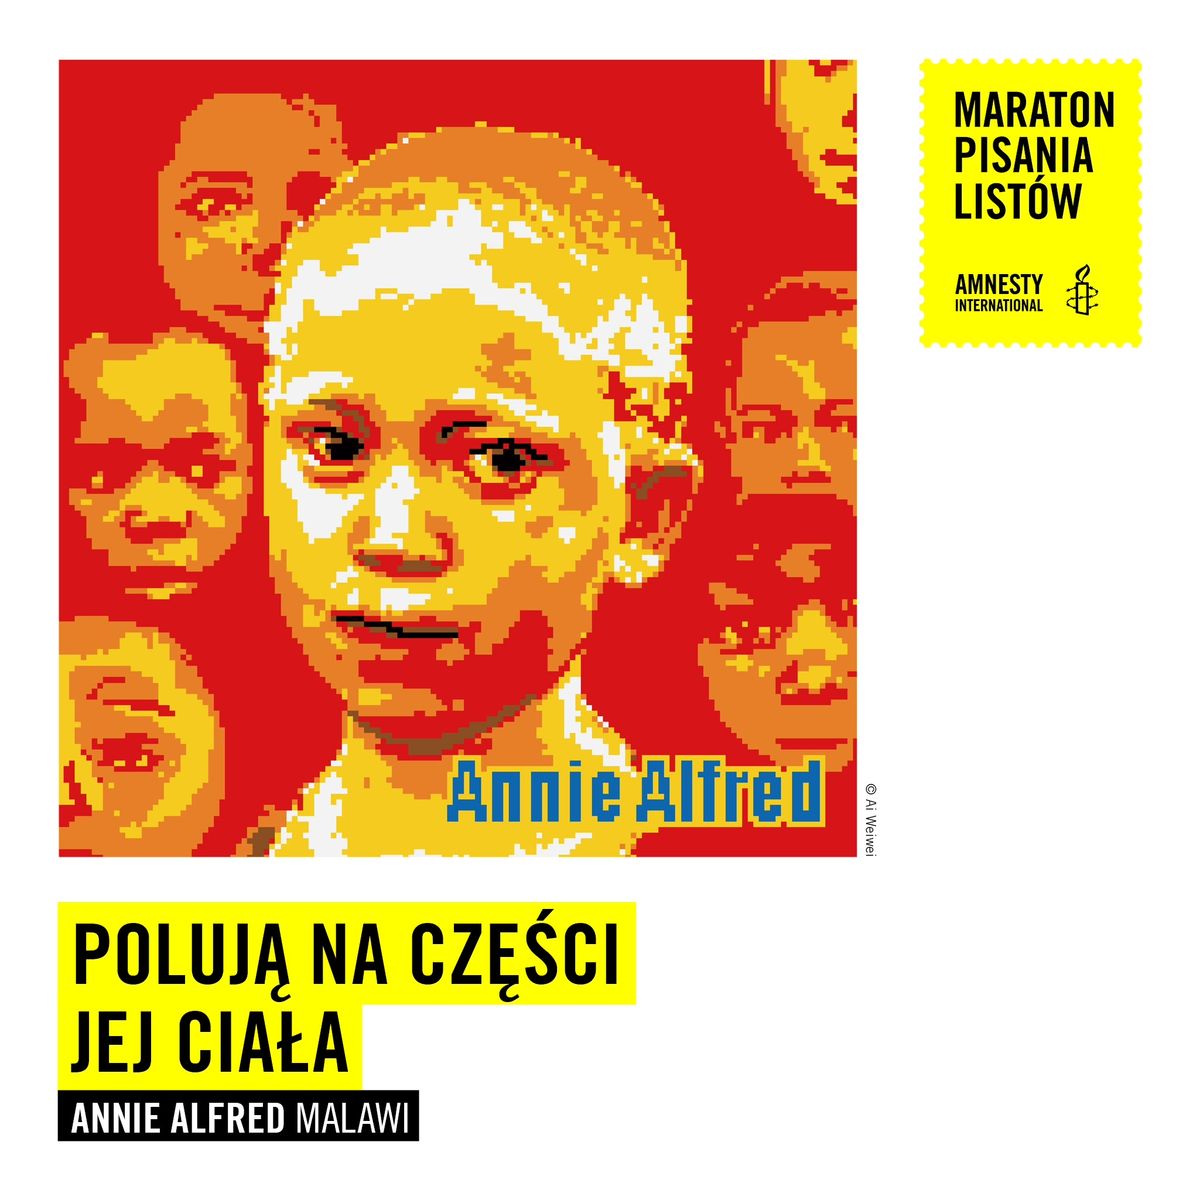 Maraton pisania listów Amnesty International: MALAWI Annie Alfred